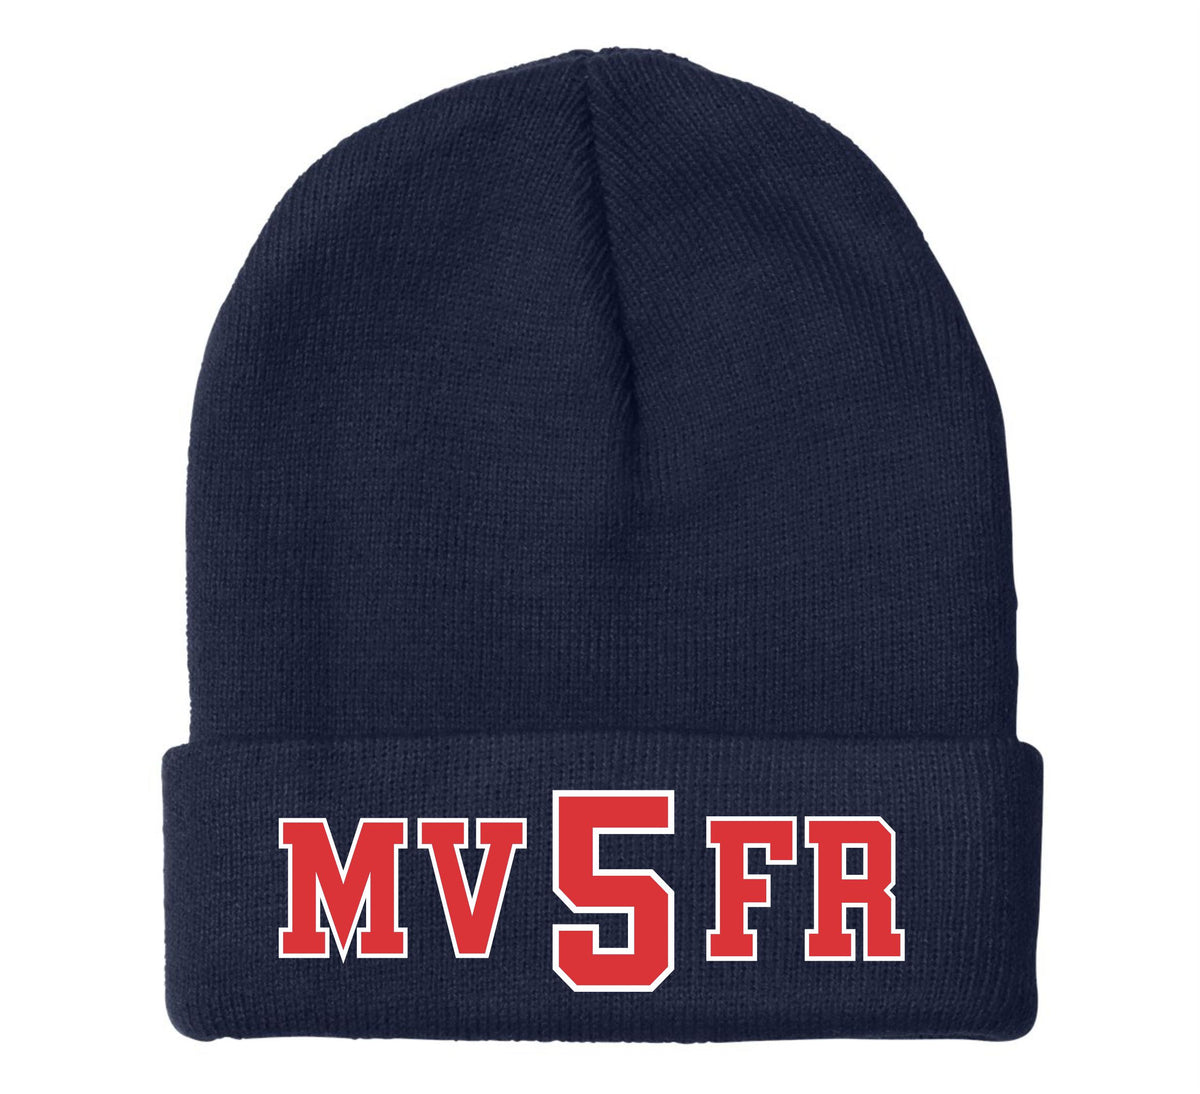 MV5FR Custom Embroidered Winter Hat